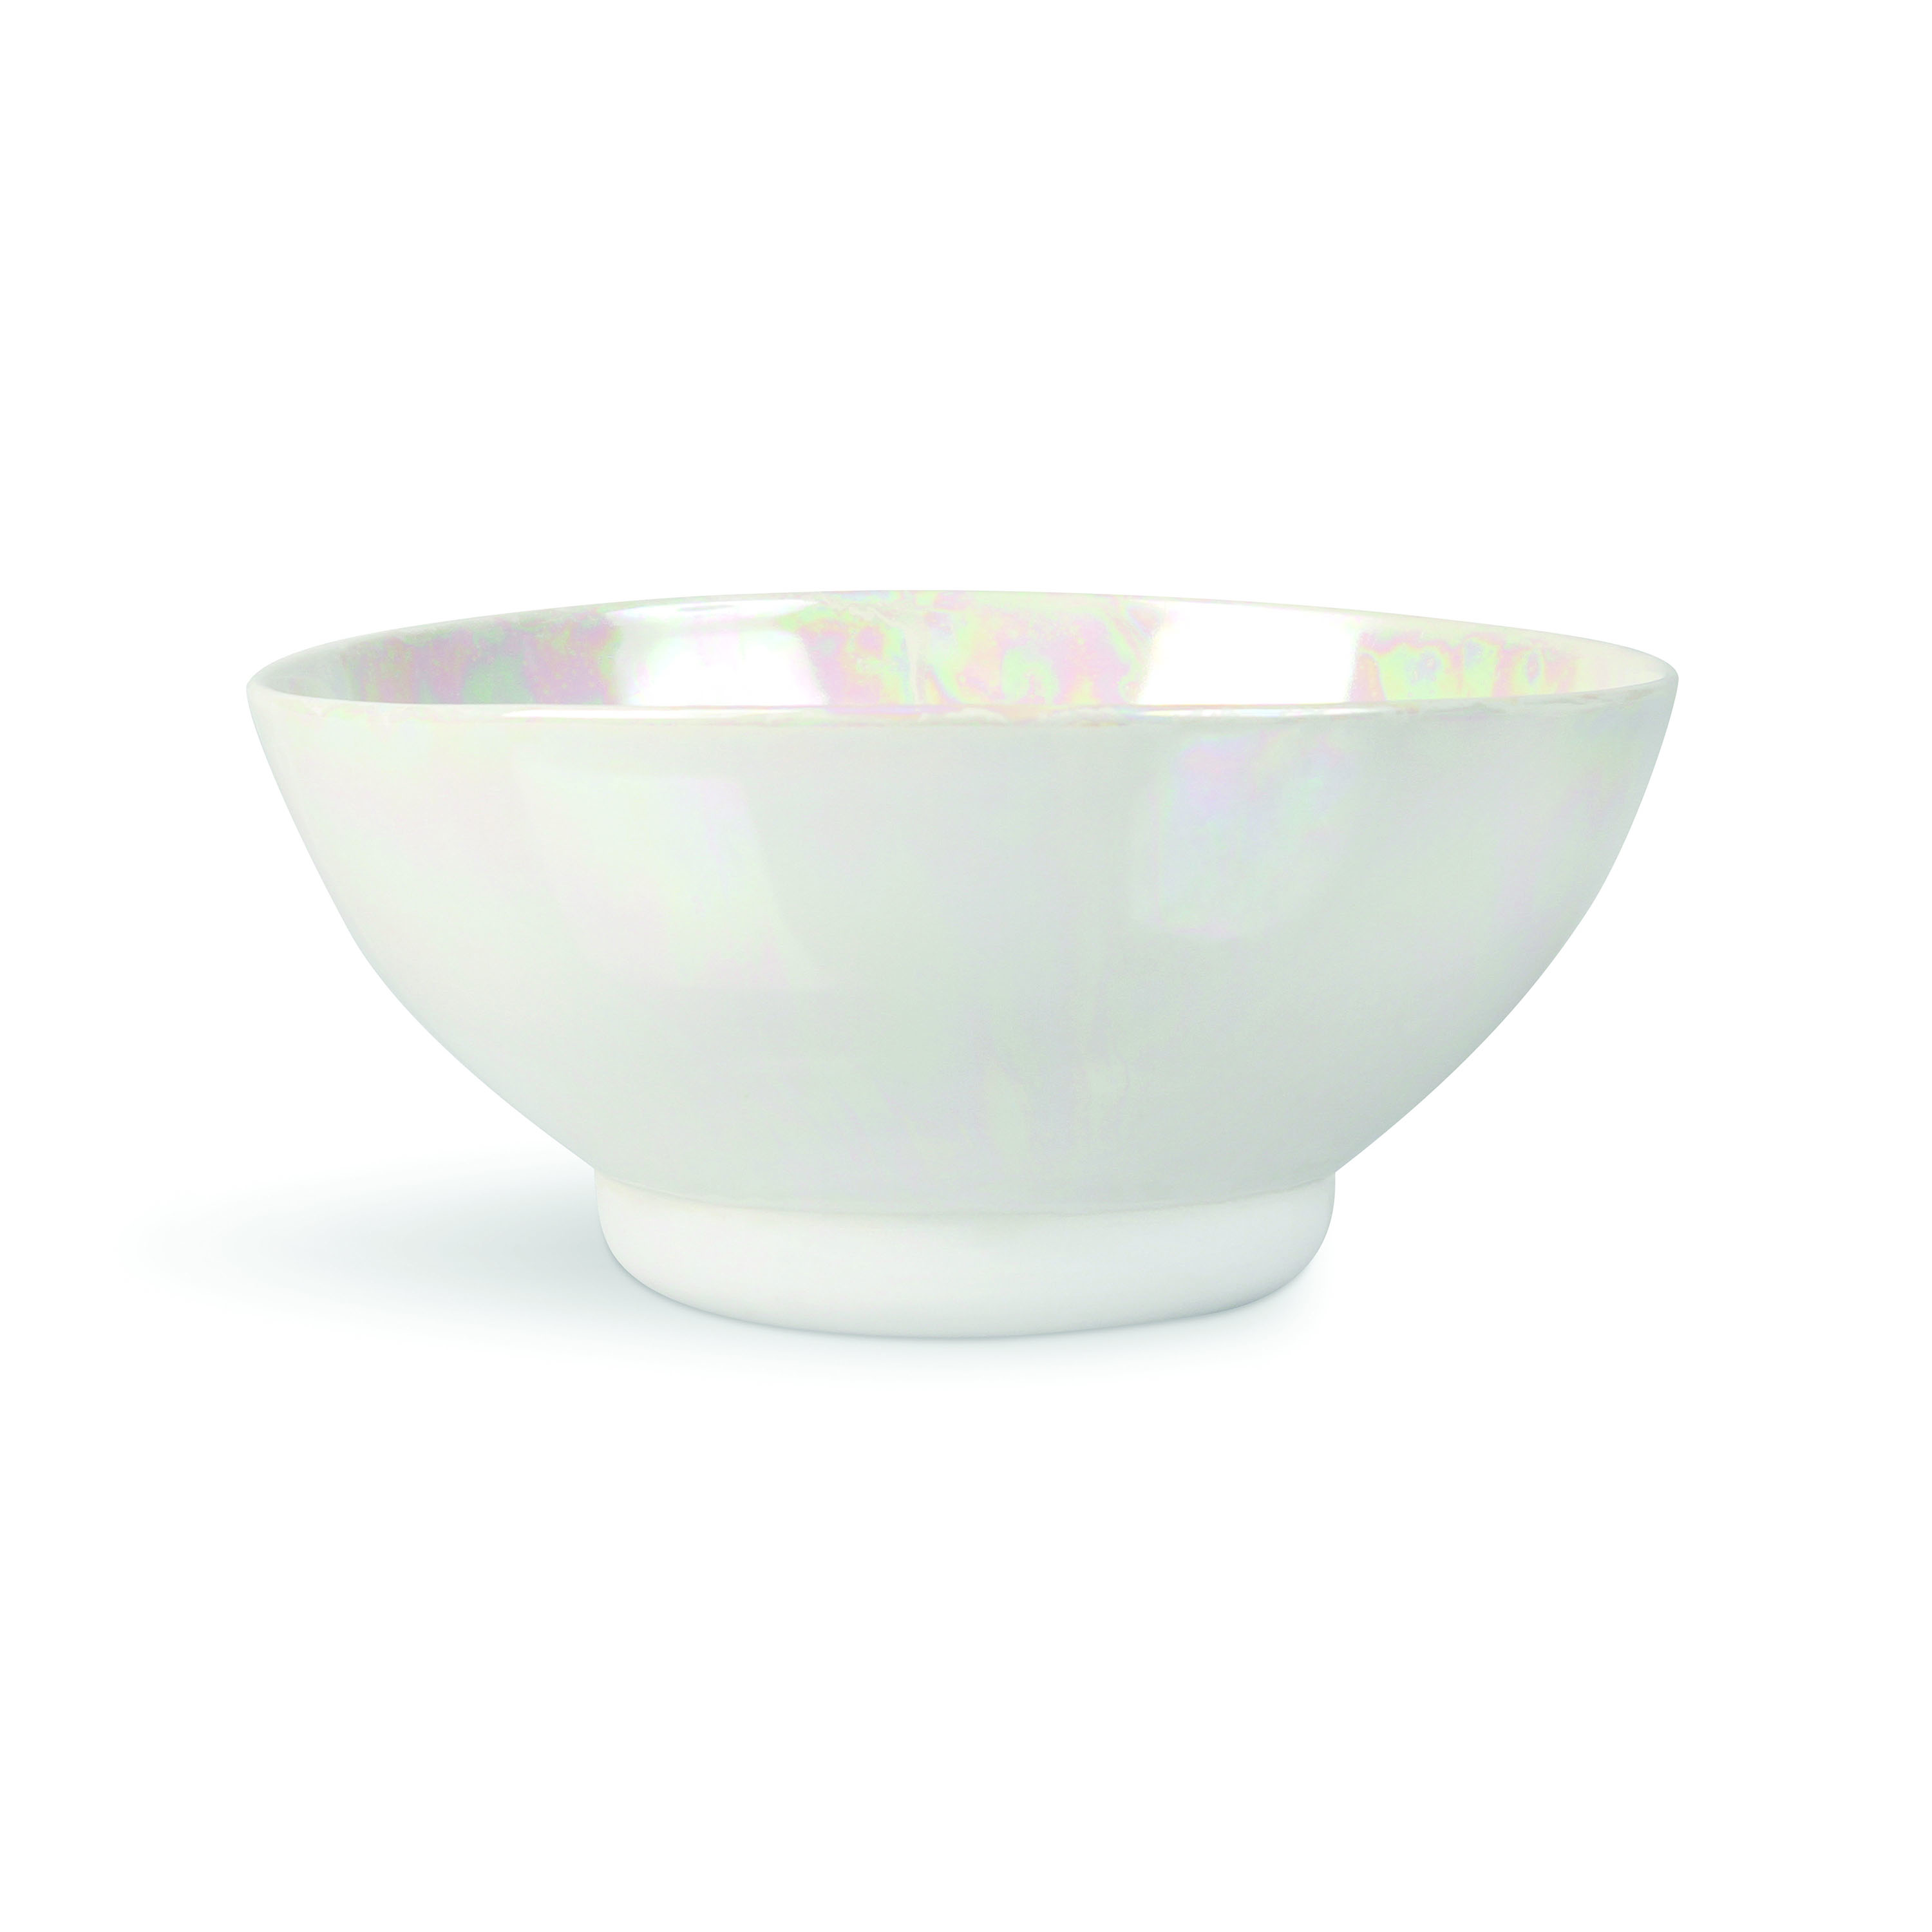 &klevering Sai Porcelain Salad Bowl in Pearl 0.8 L